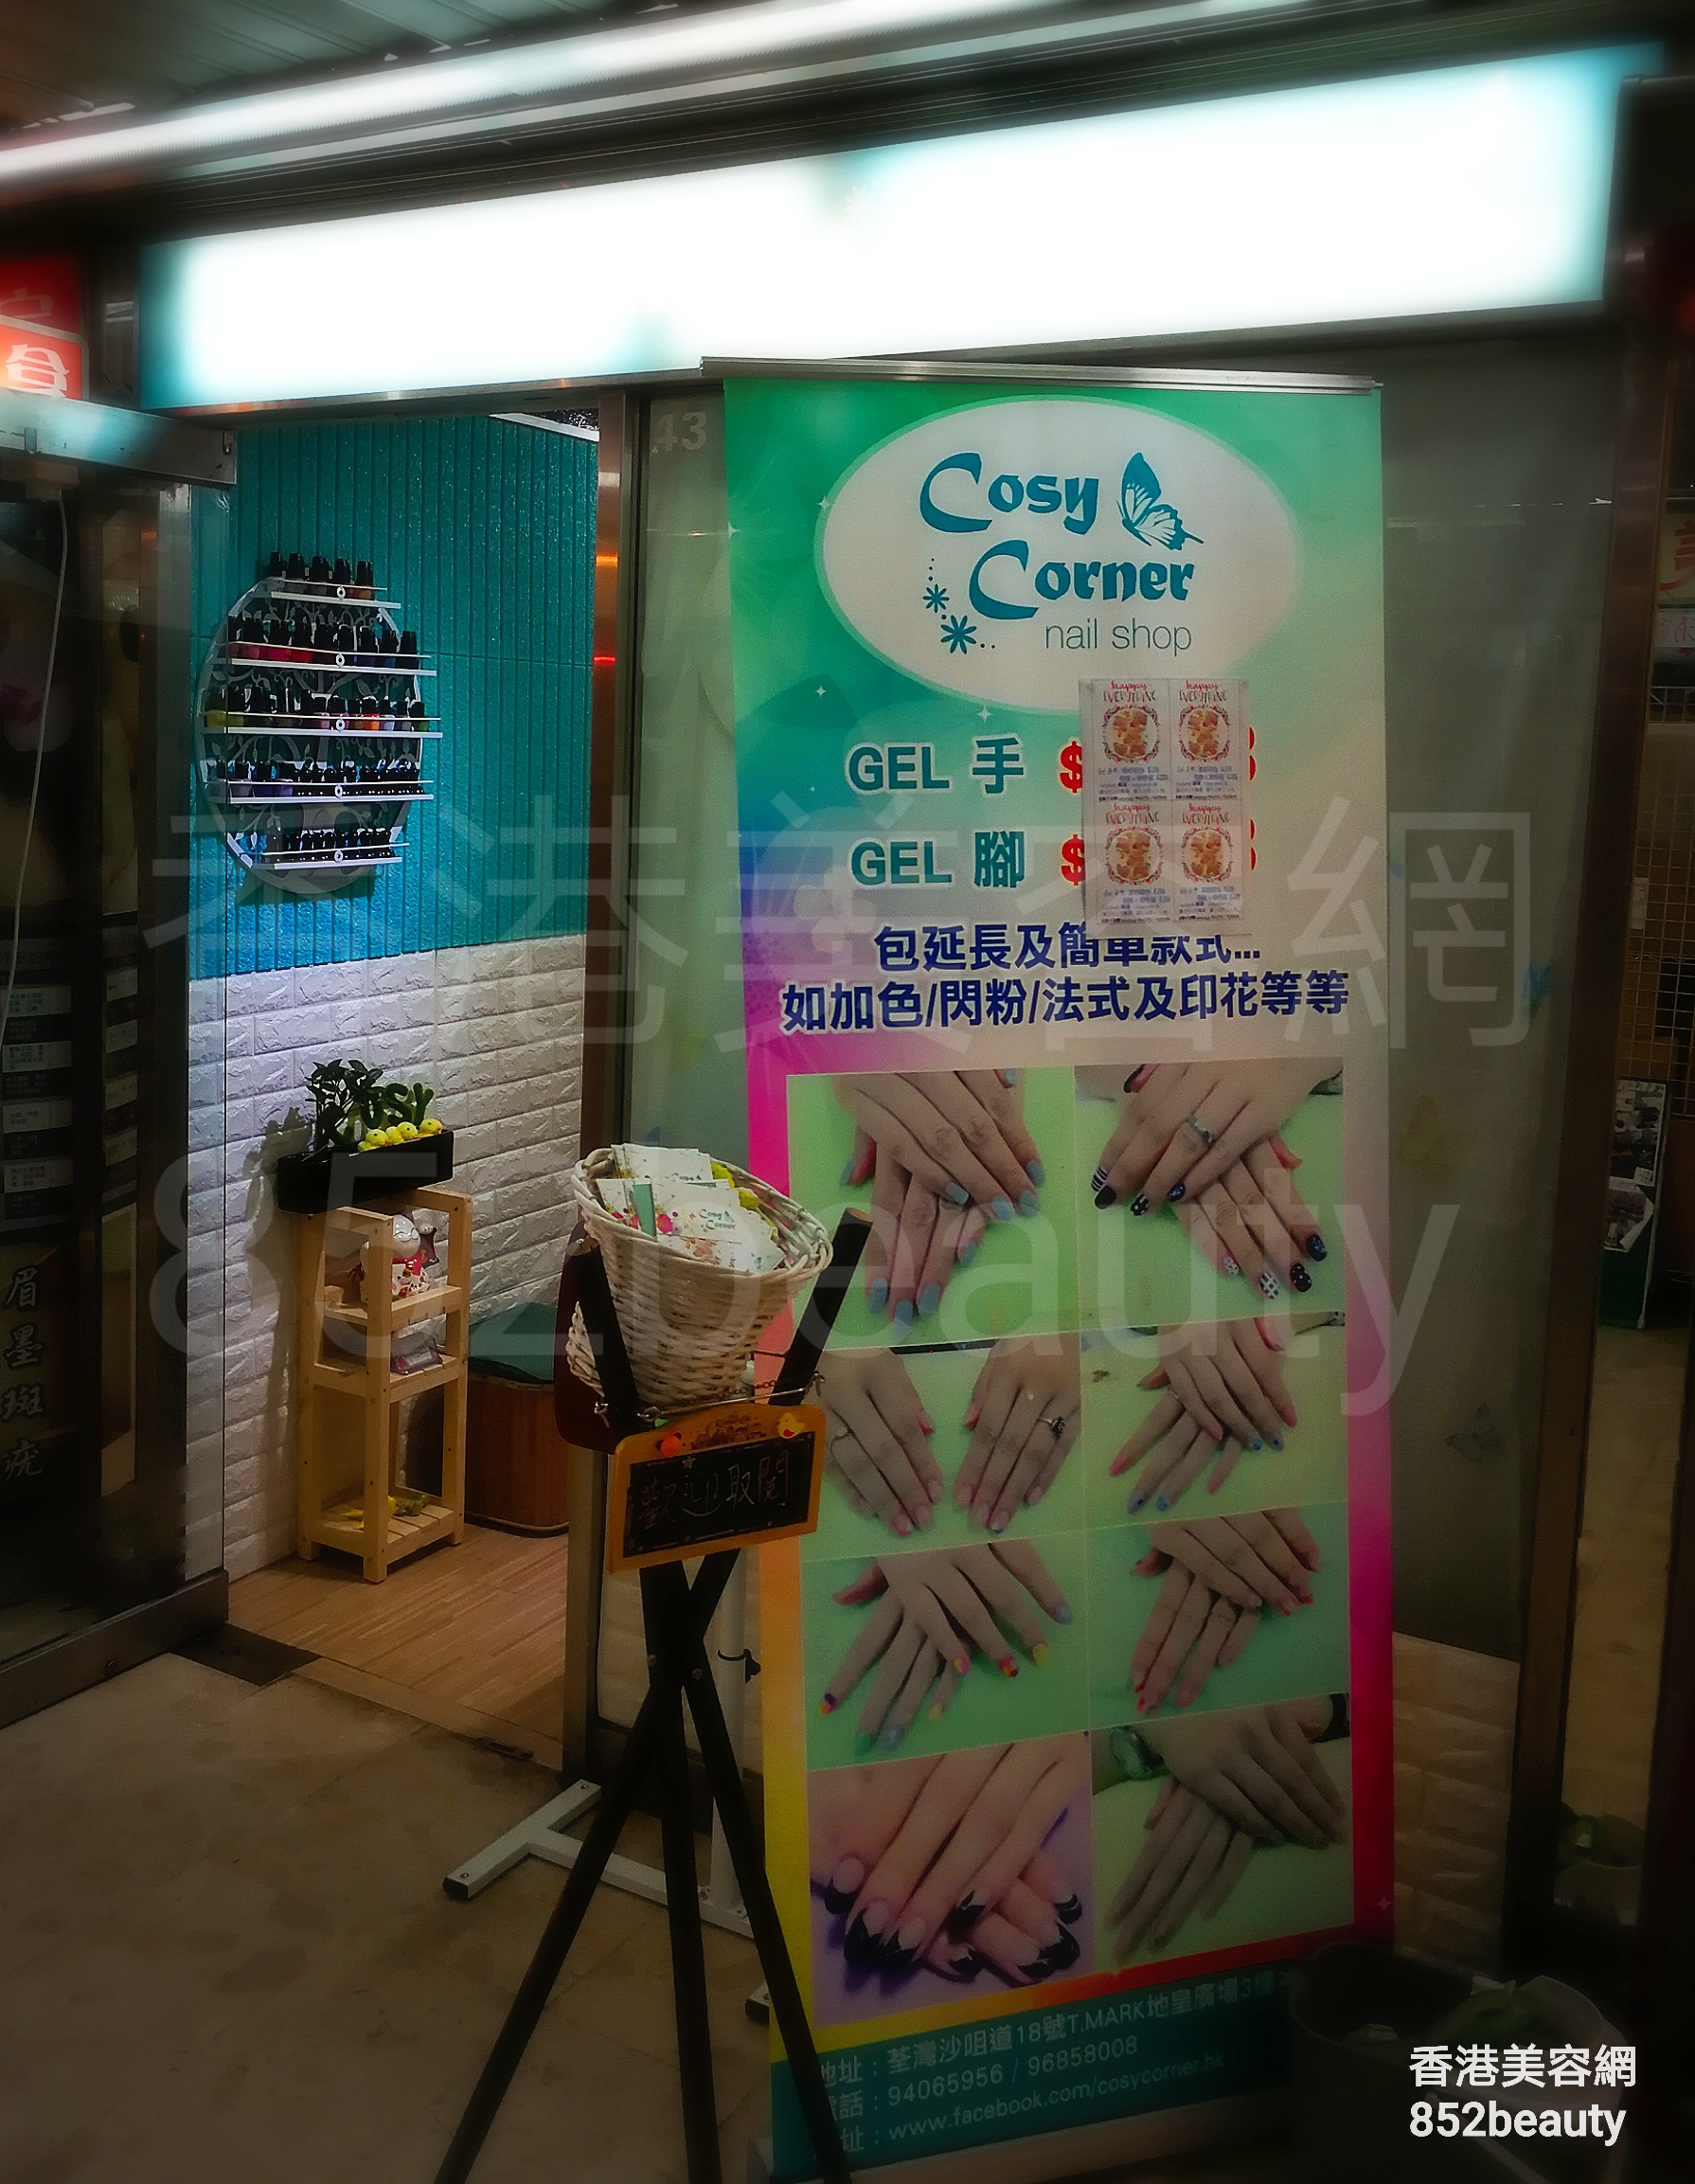 香港美容網 Hong Kong Beauty Salon 美容院 / 美容師: Cosy Corner